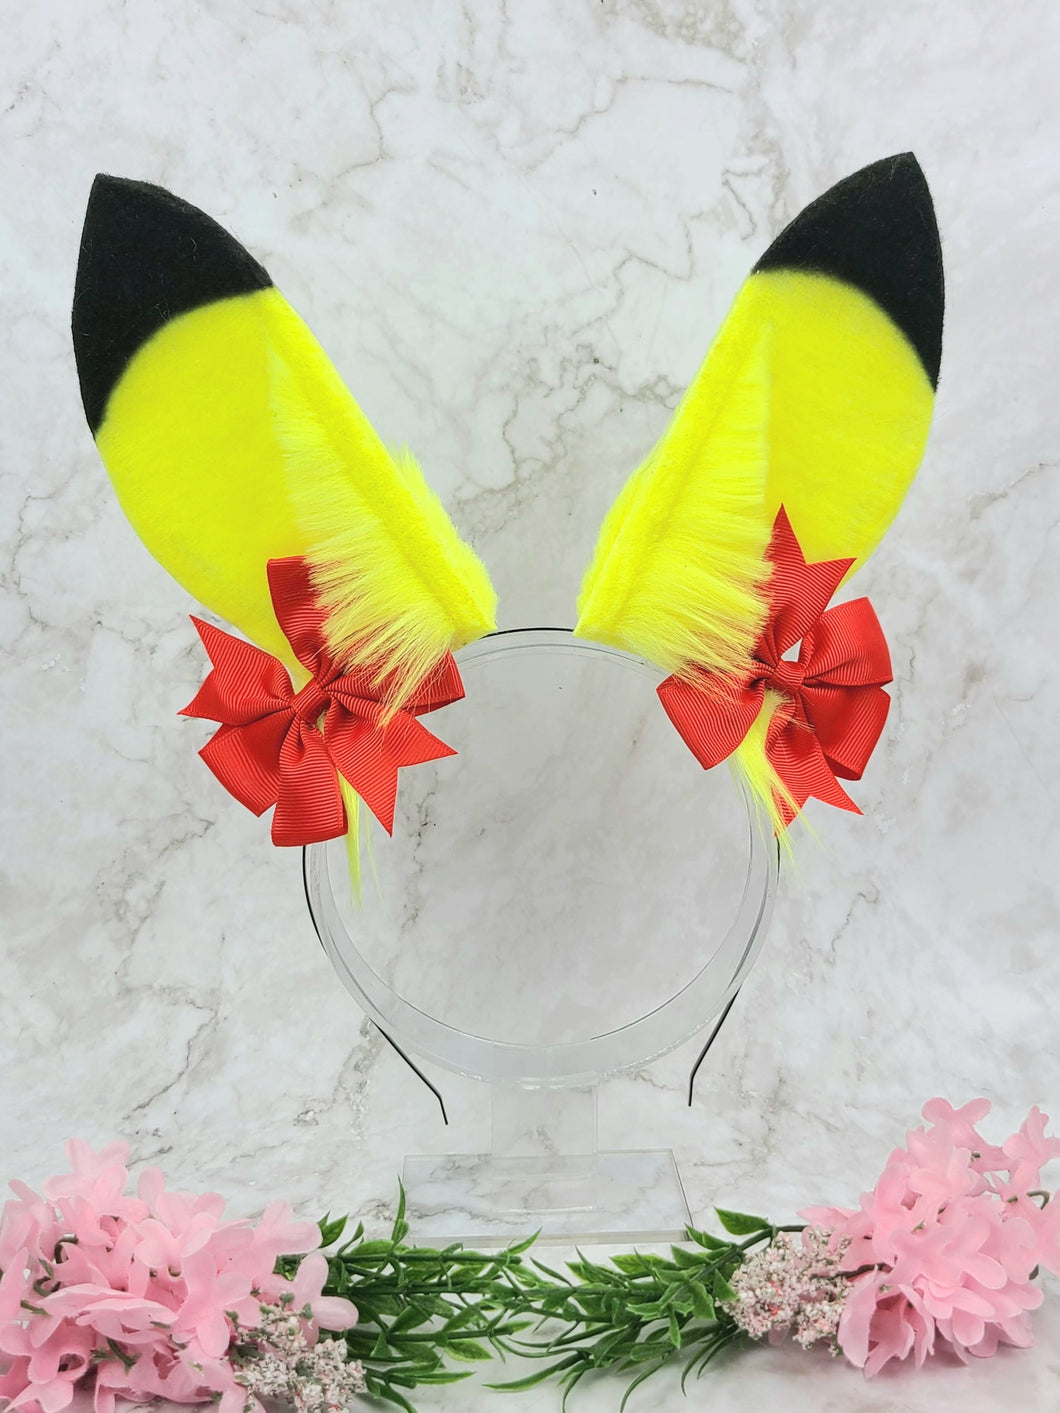 UV Reactive Pikachu Inspired Bunny